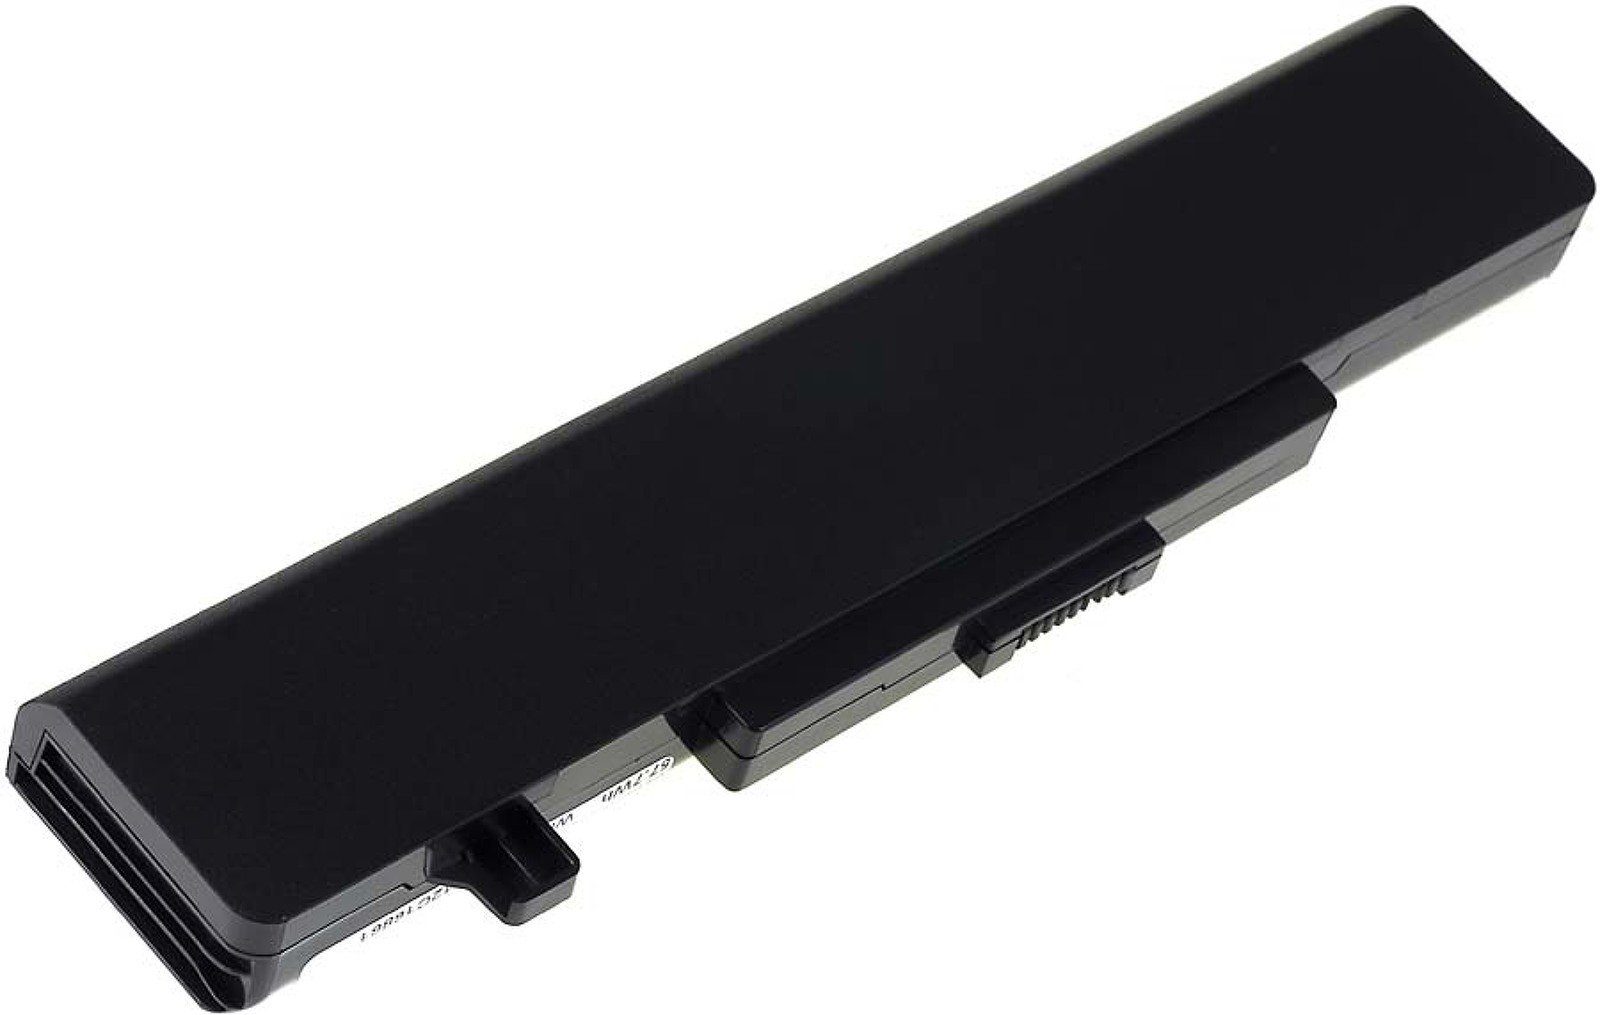 ThinkPad Edge 5200 Laptop-Akku Lenovo für Akku Powery mAh E535 (11.1 V)